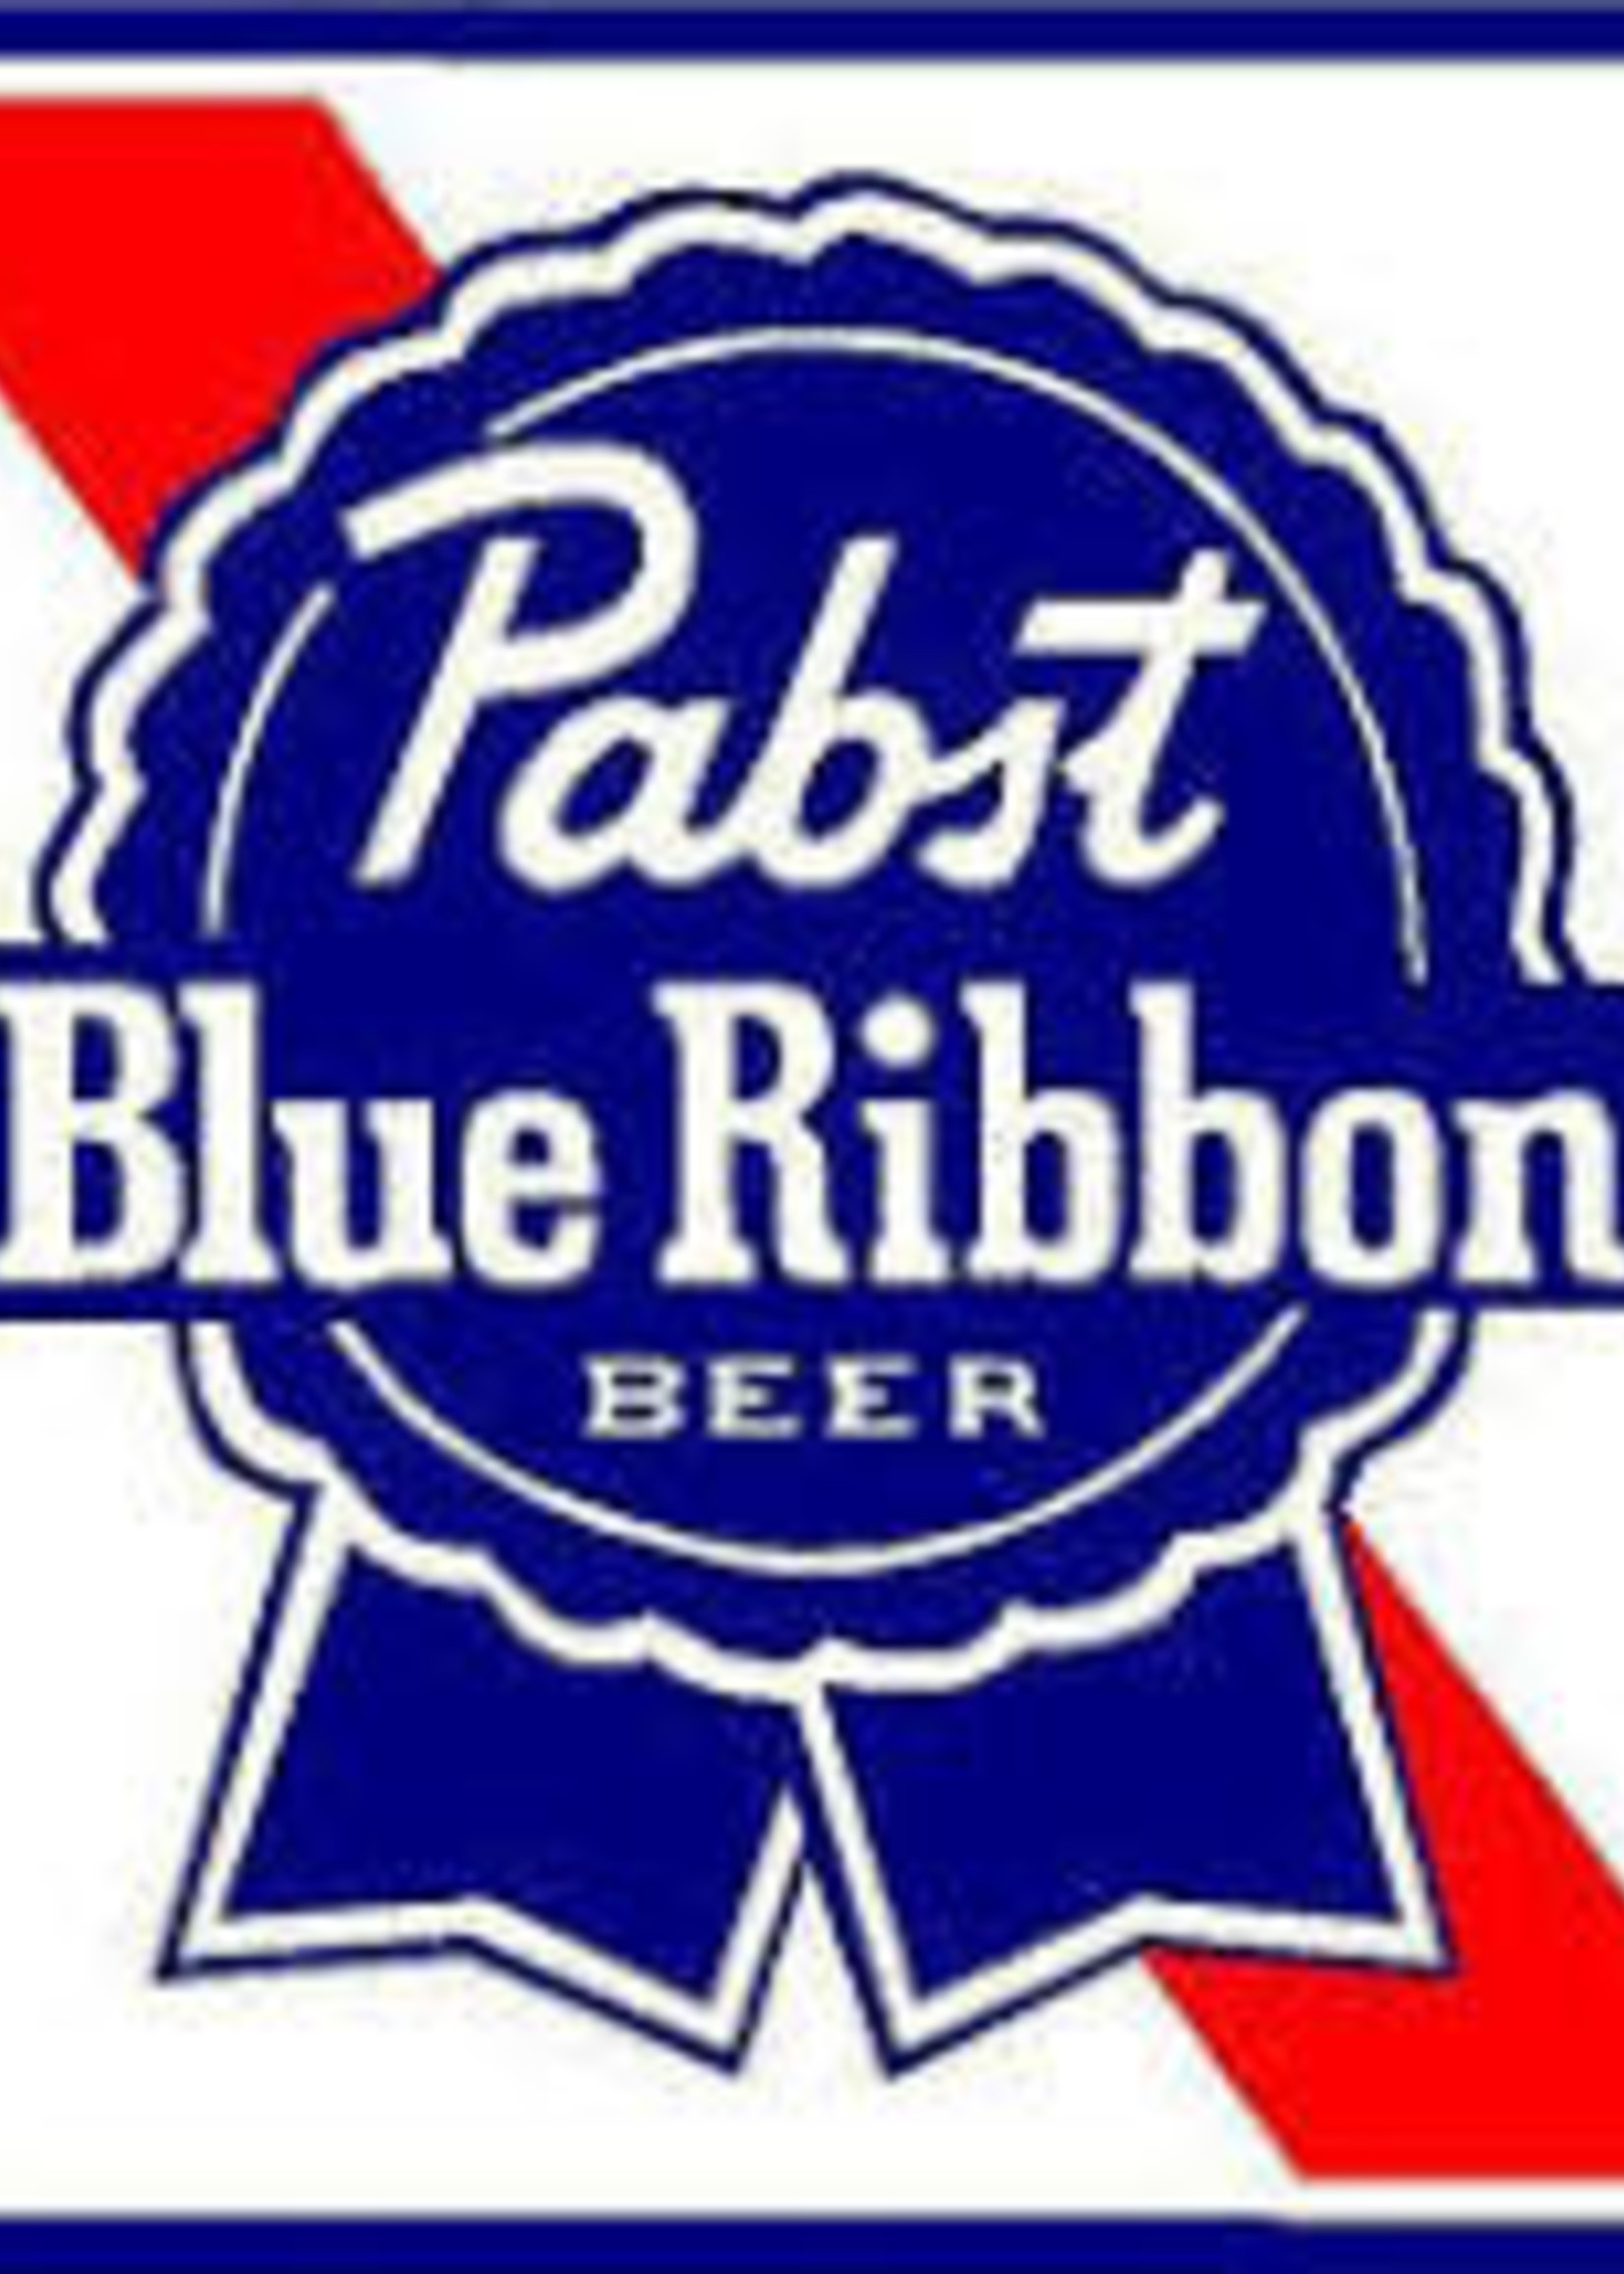 Pabst Blue Ribbon PBR Full Keg CC